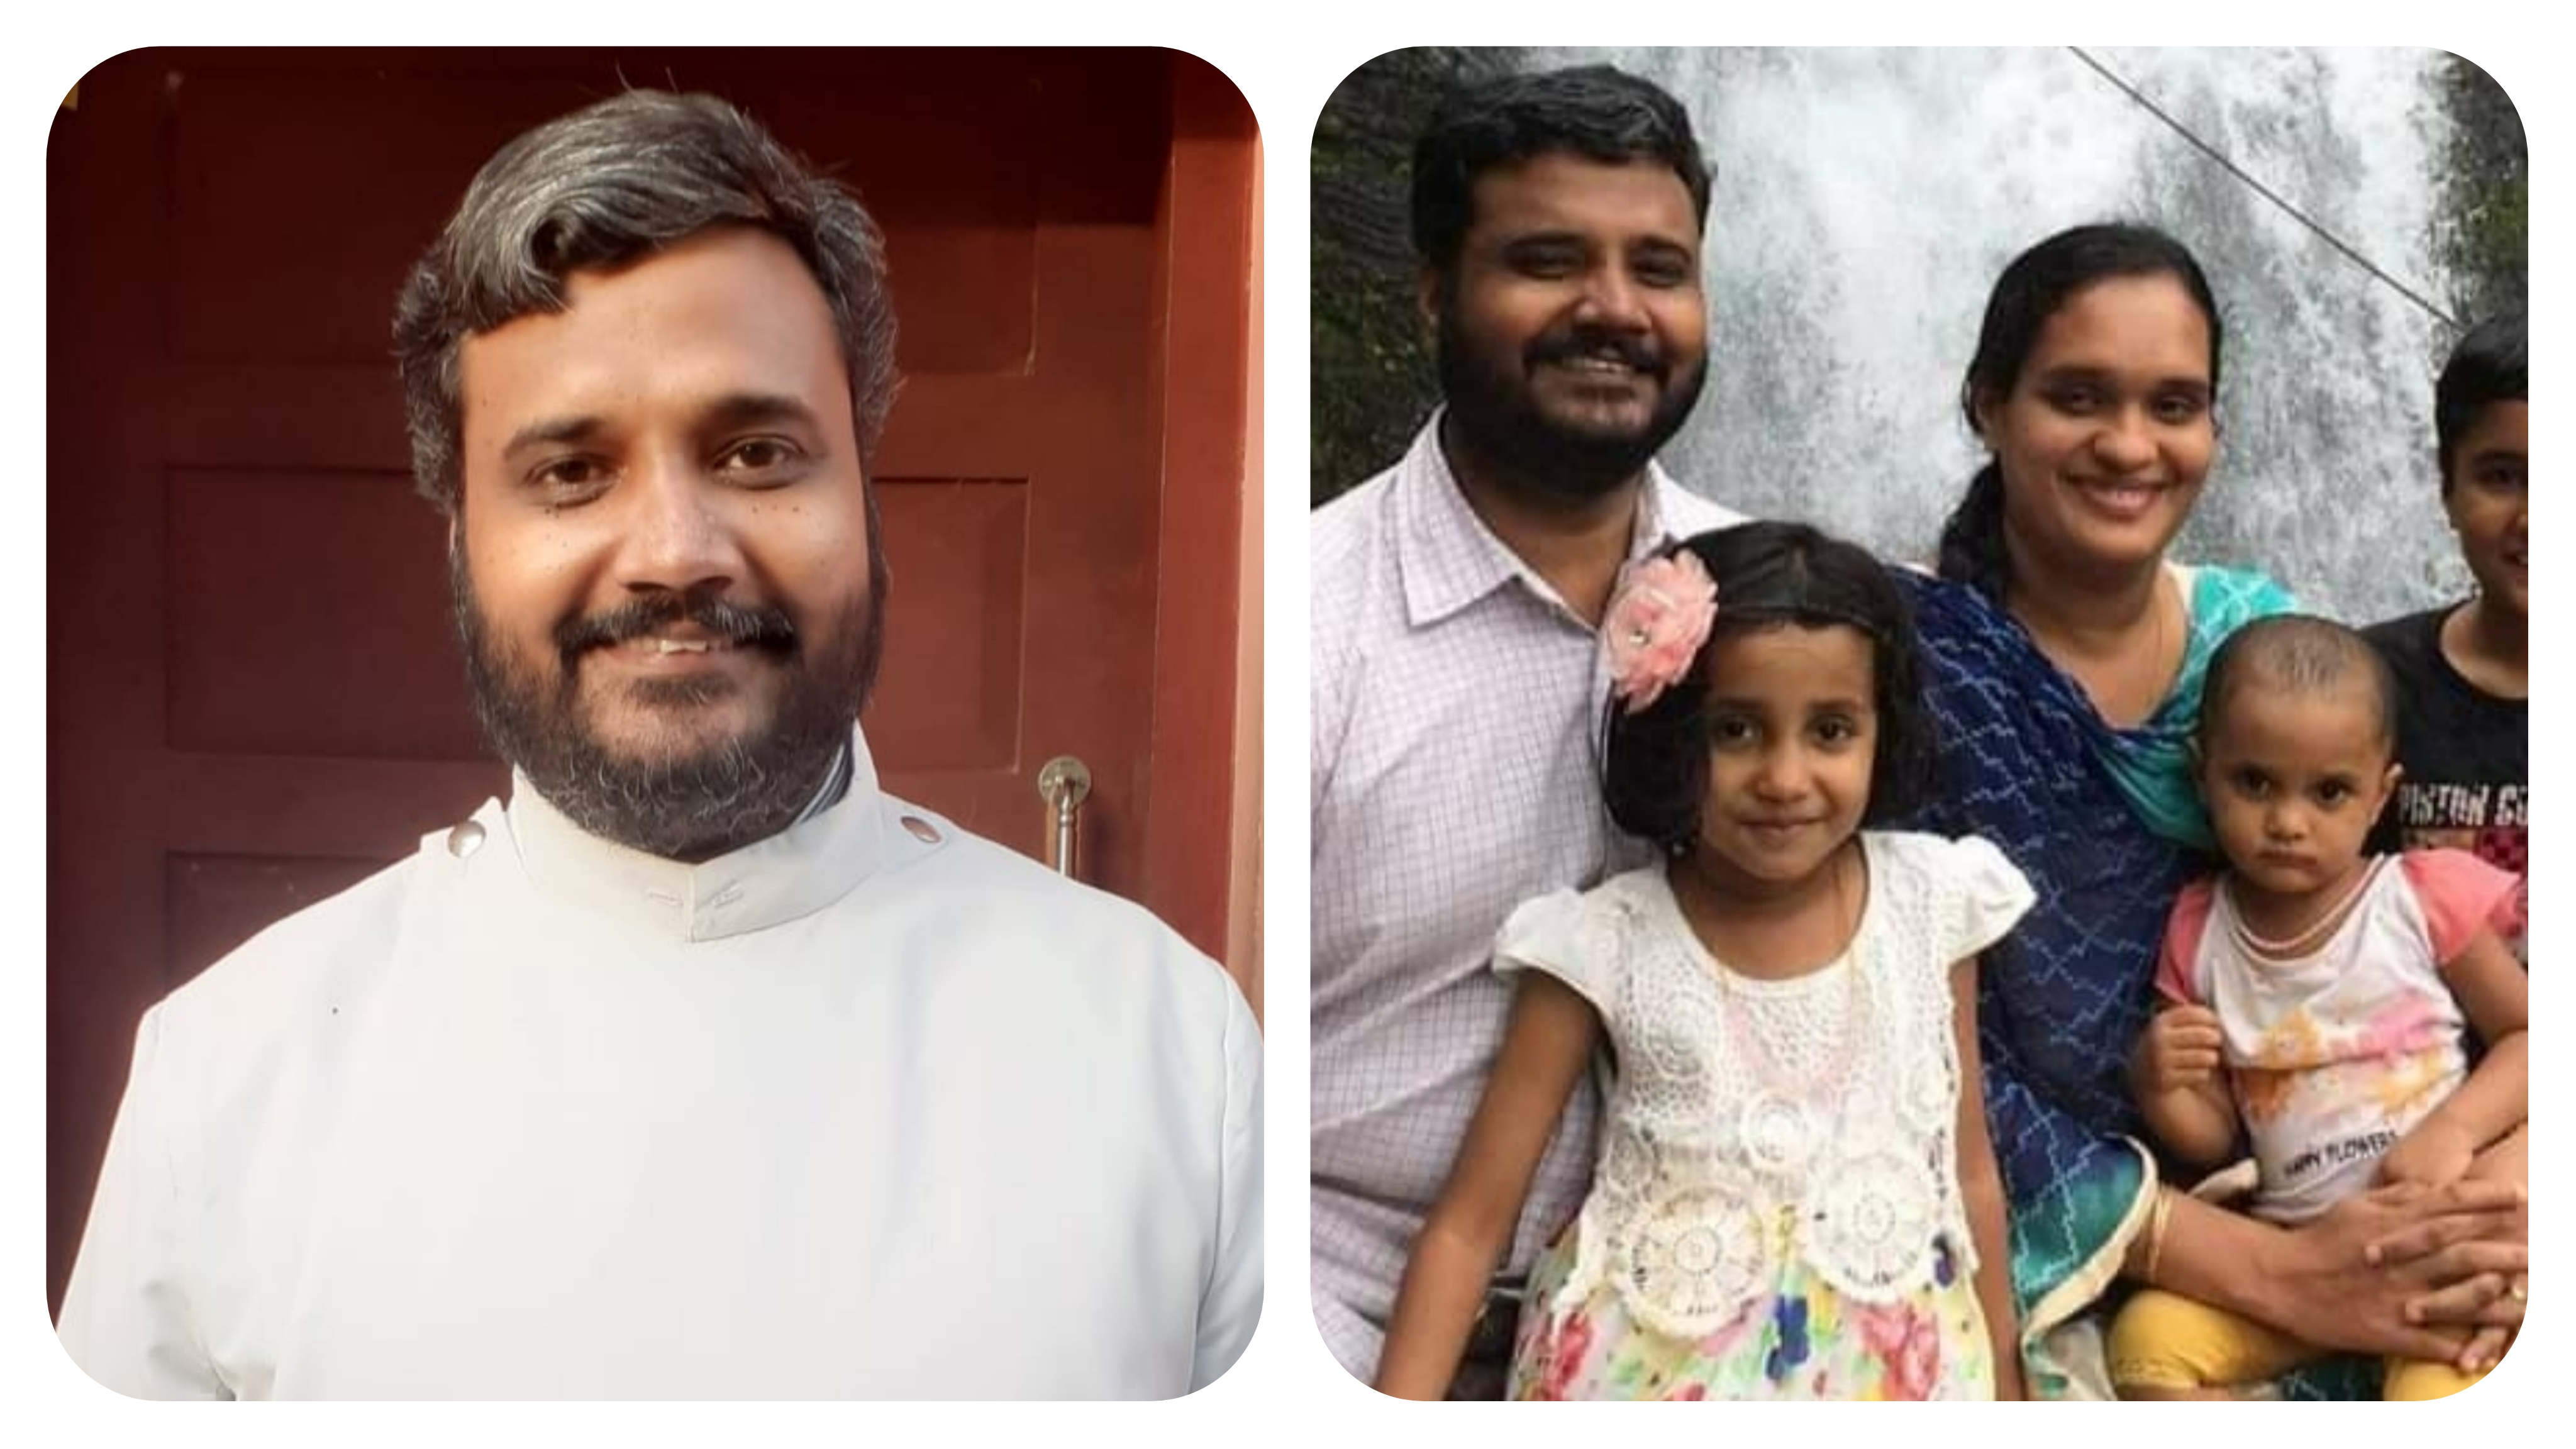 Rev. Abraham Sathyanathan & family